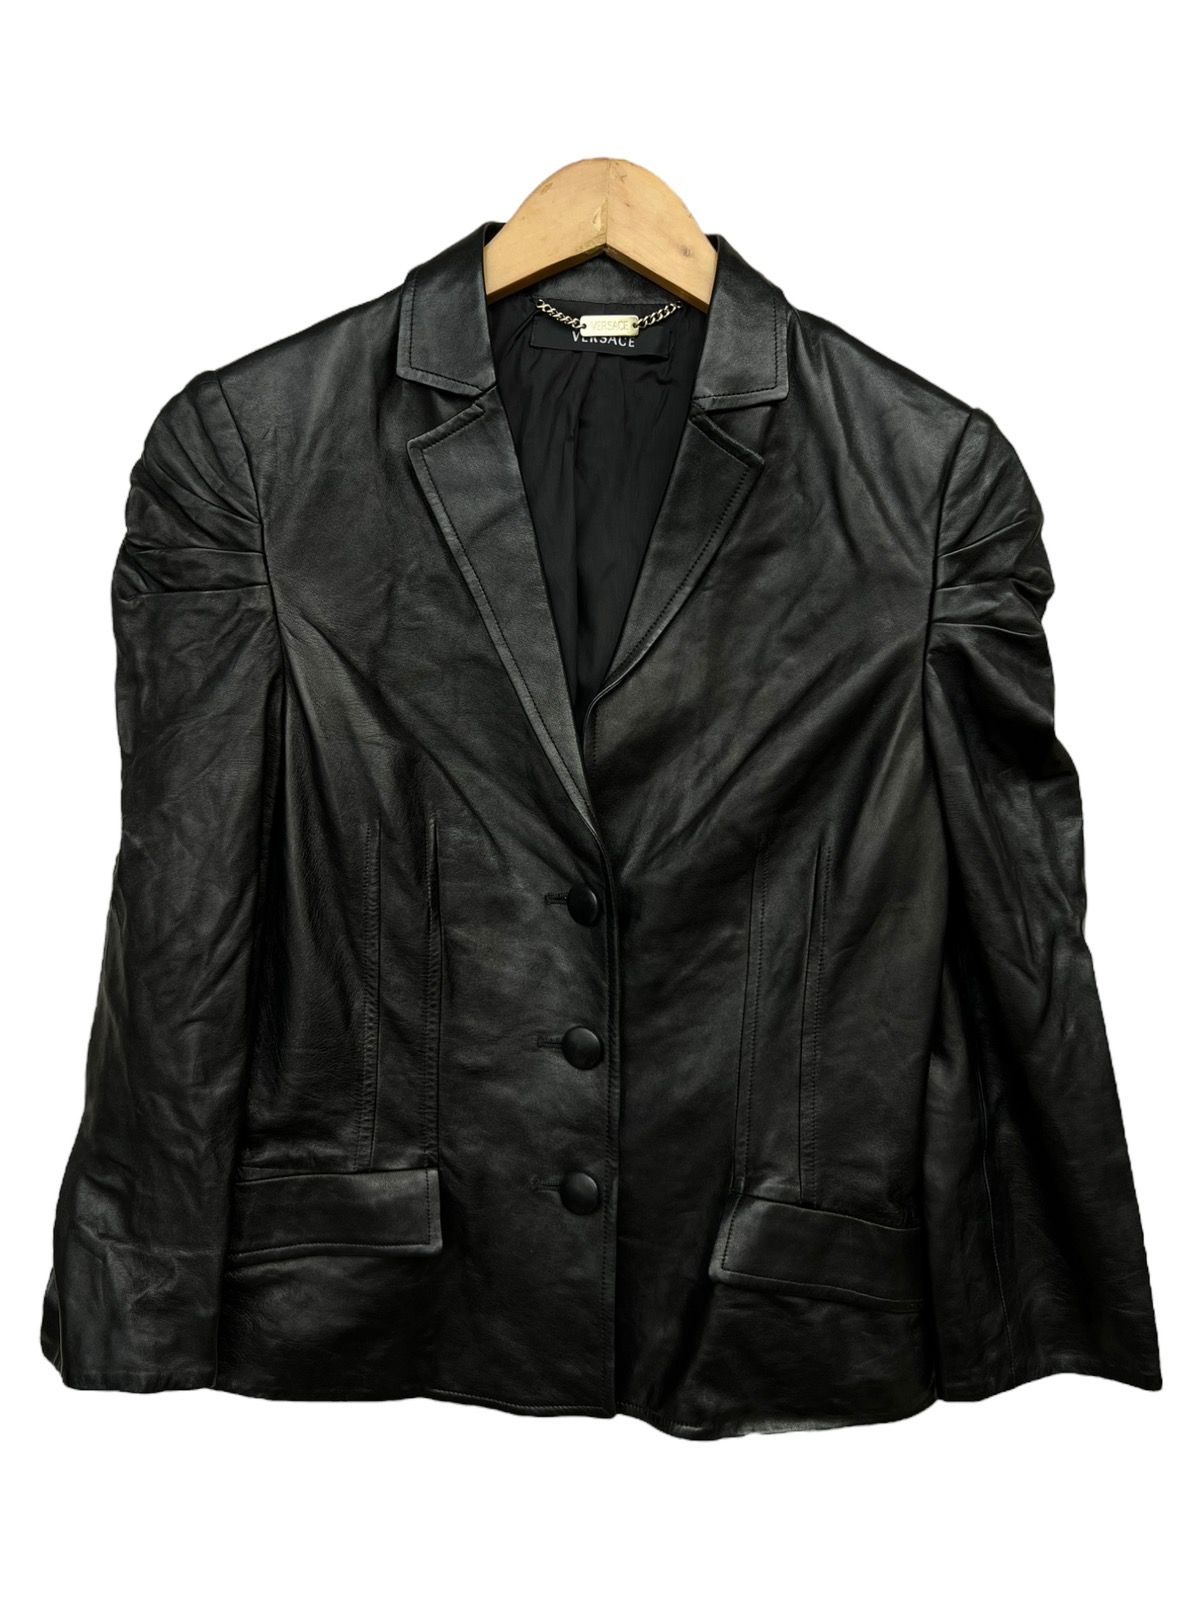 Versace Leather Jacket - 1